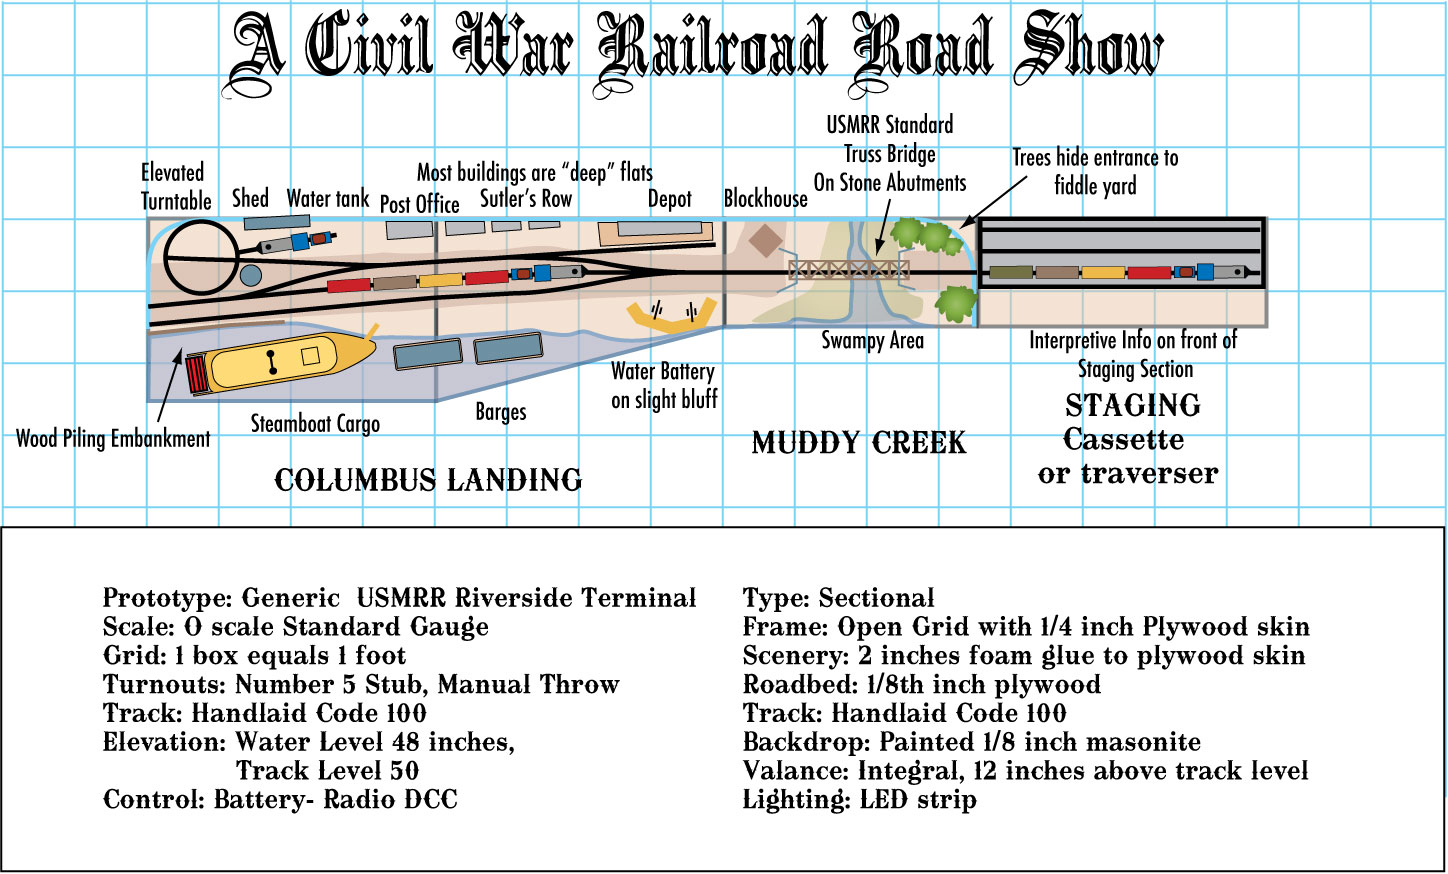 USMRR Aquia Line and other Model Railroad Adventures: Road Show Design 